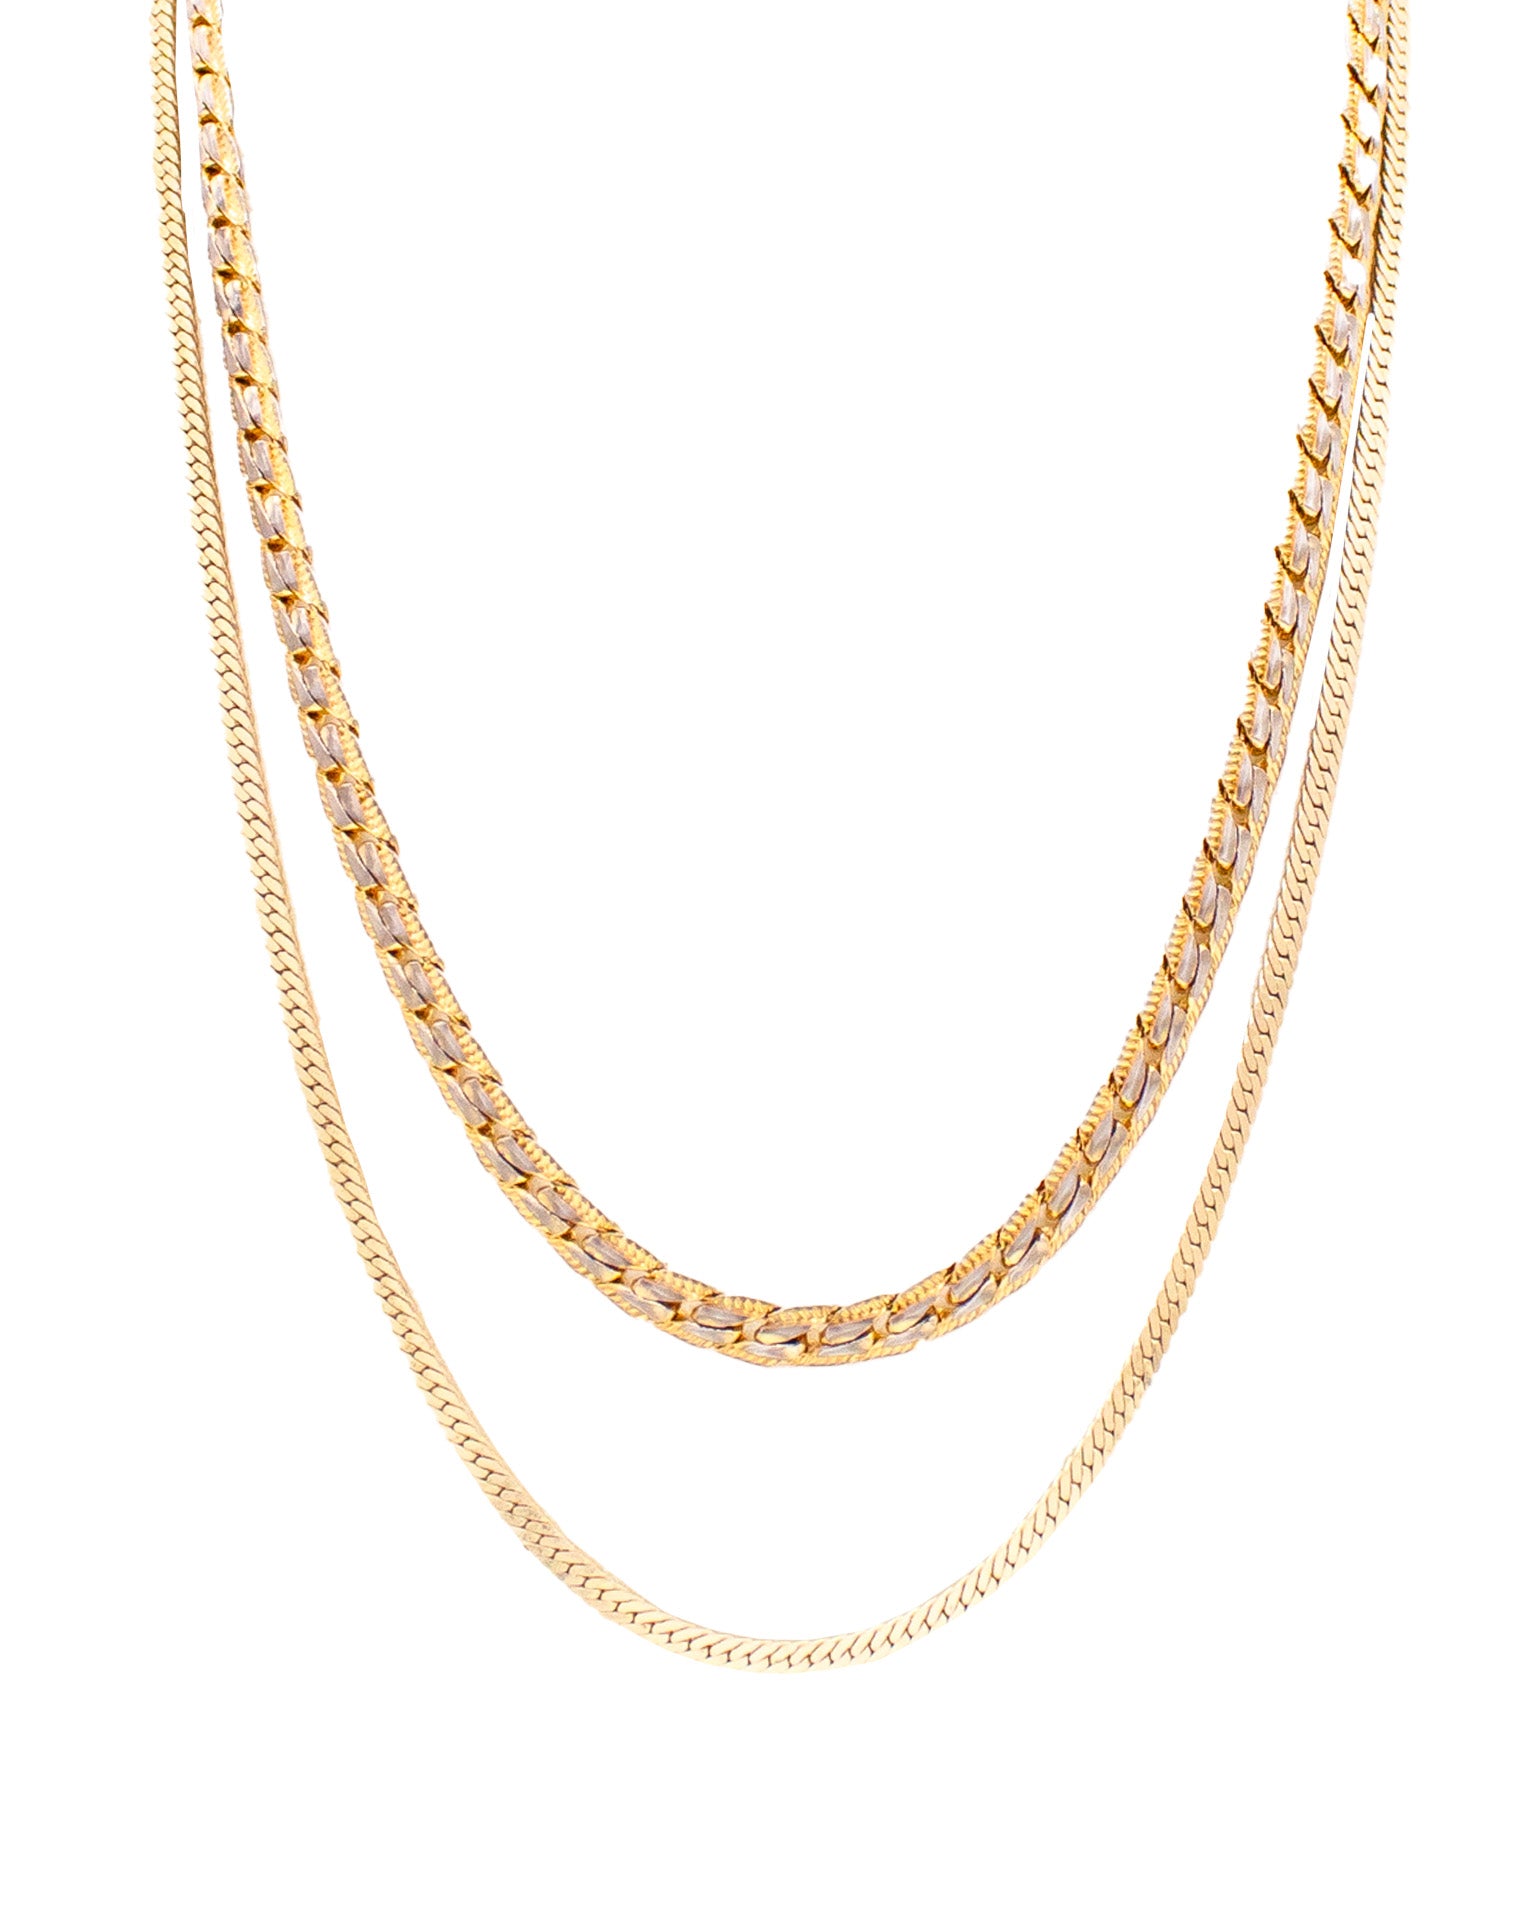 Leonor Vintage Gold Necklace Set